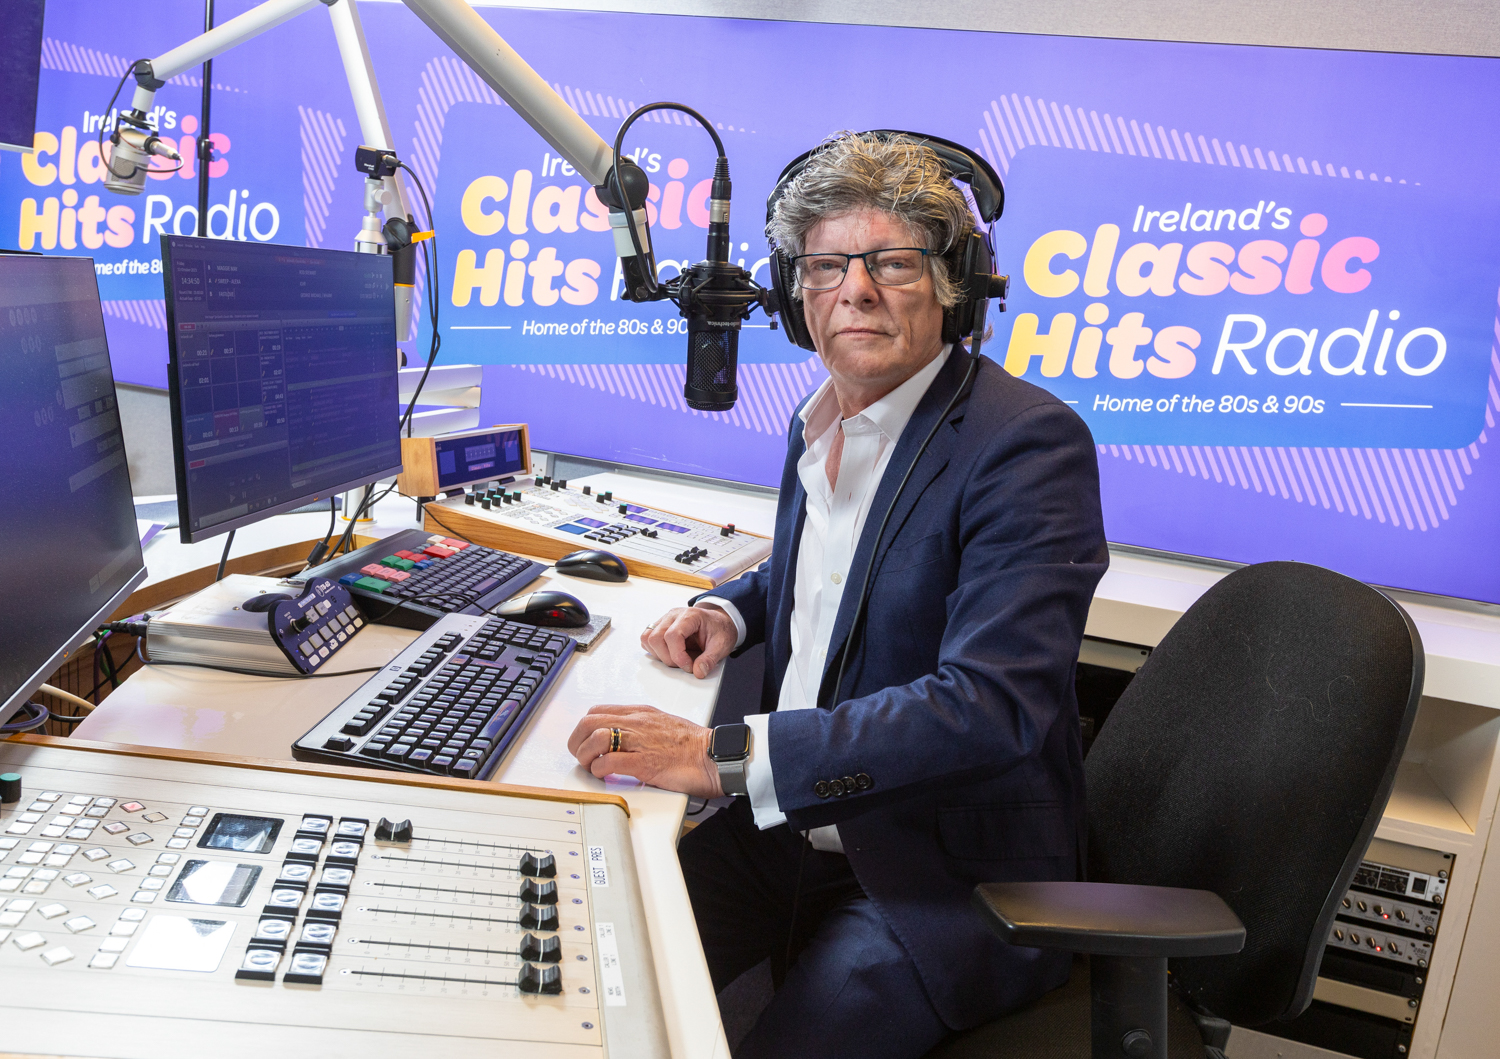 Ireland’s Classic Hits Radio Host Niall Boylan Announces Candidacy for Dublin’s European Elections